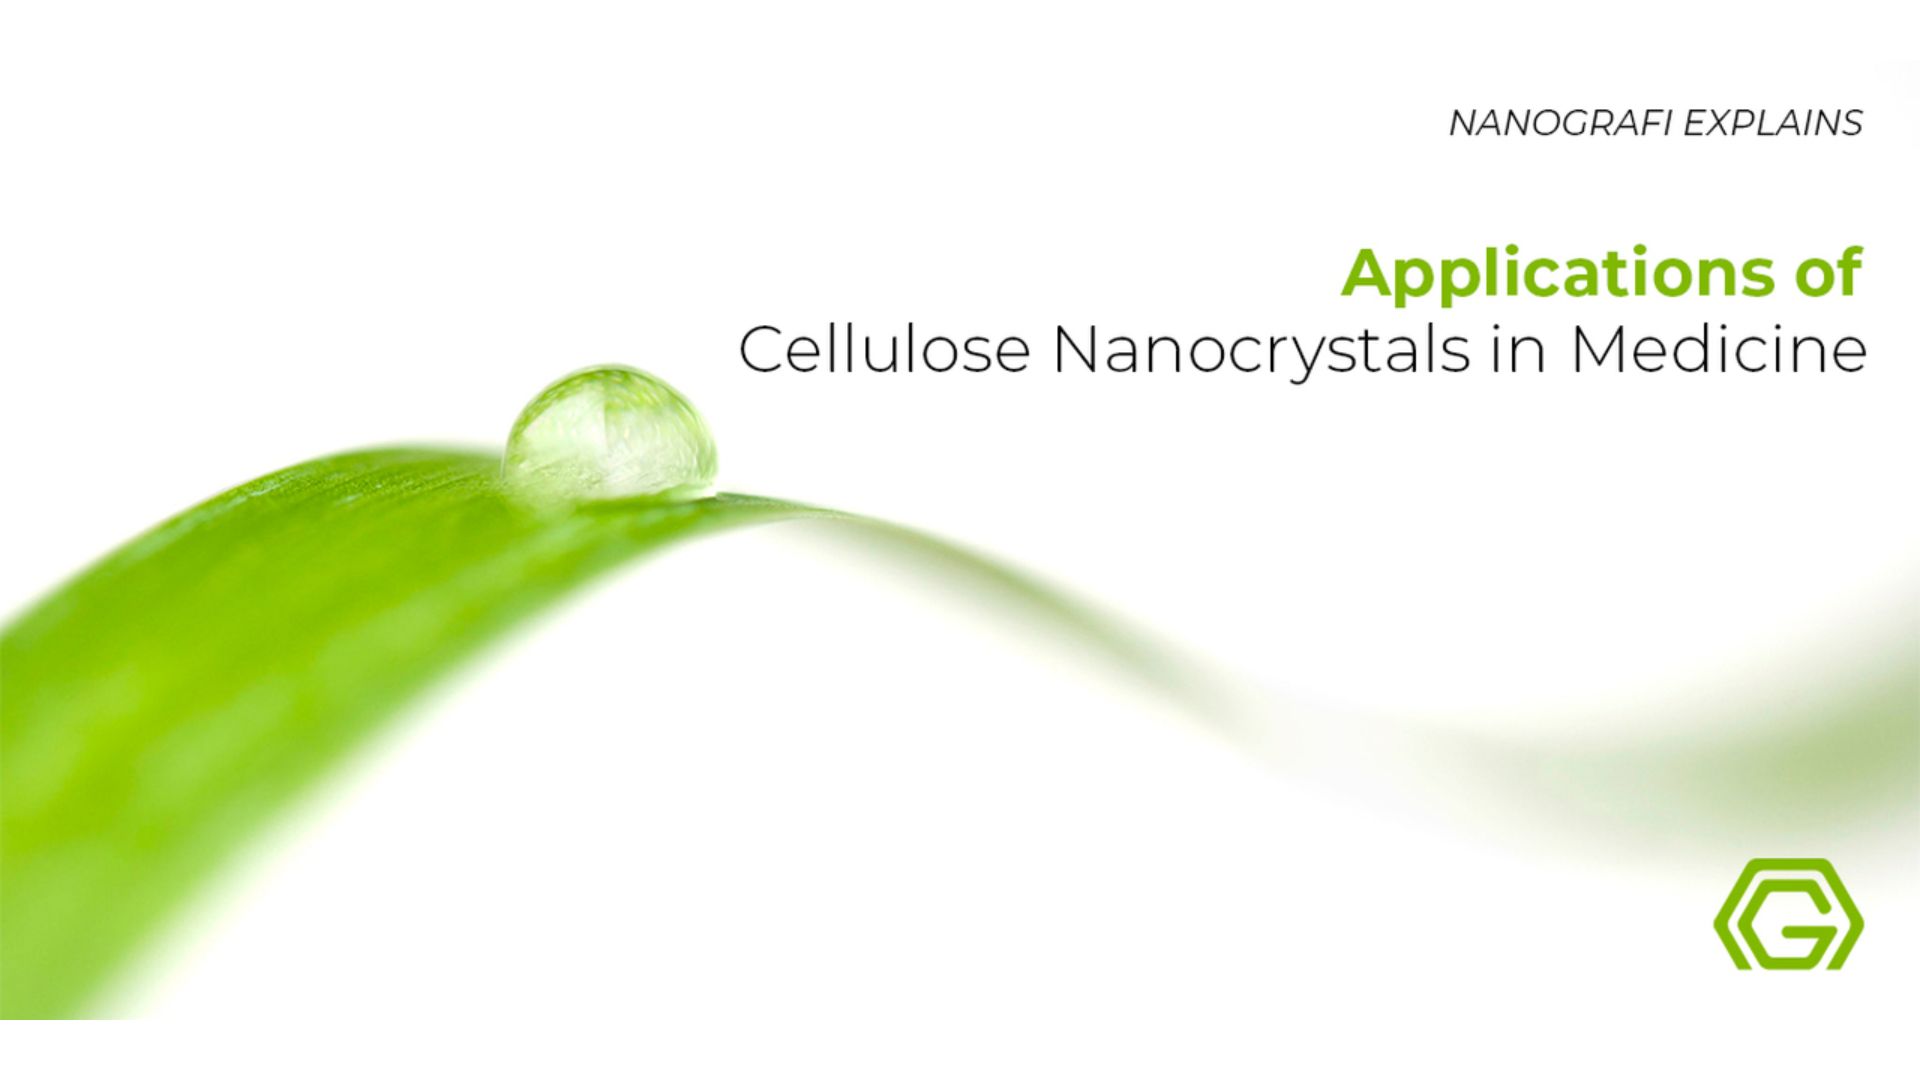 Applications of cellulose nanocrystals in medicine